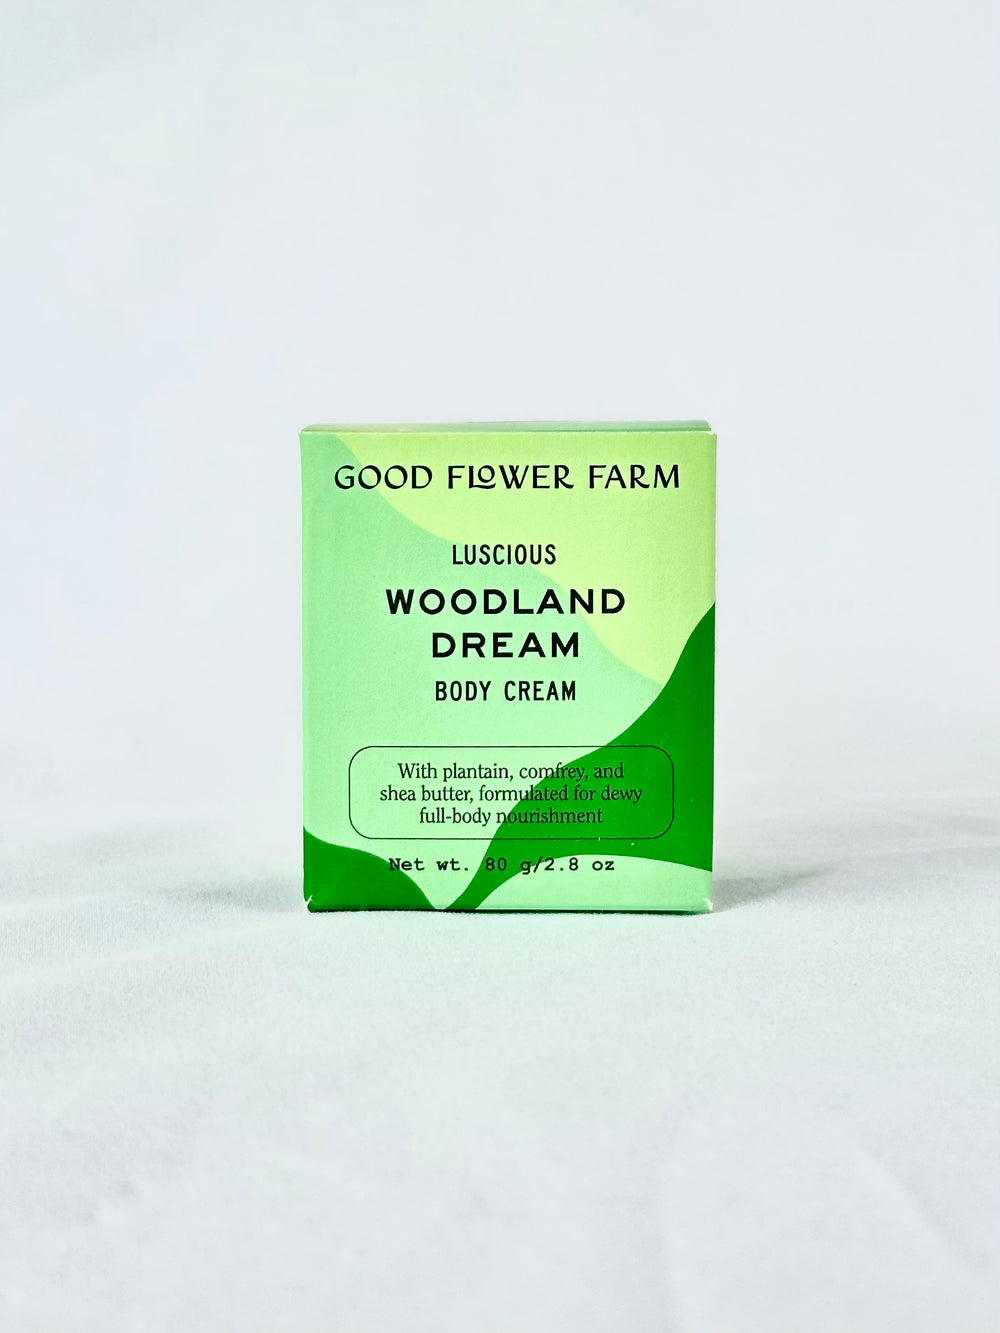 Woodland Dream Body Cream